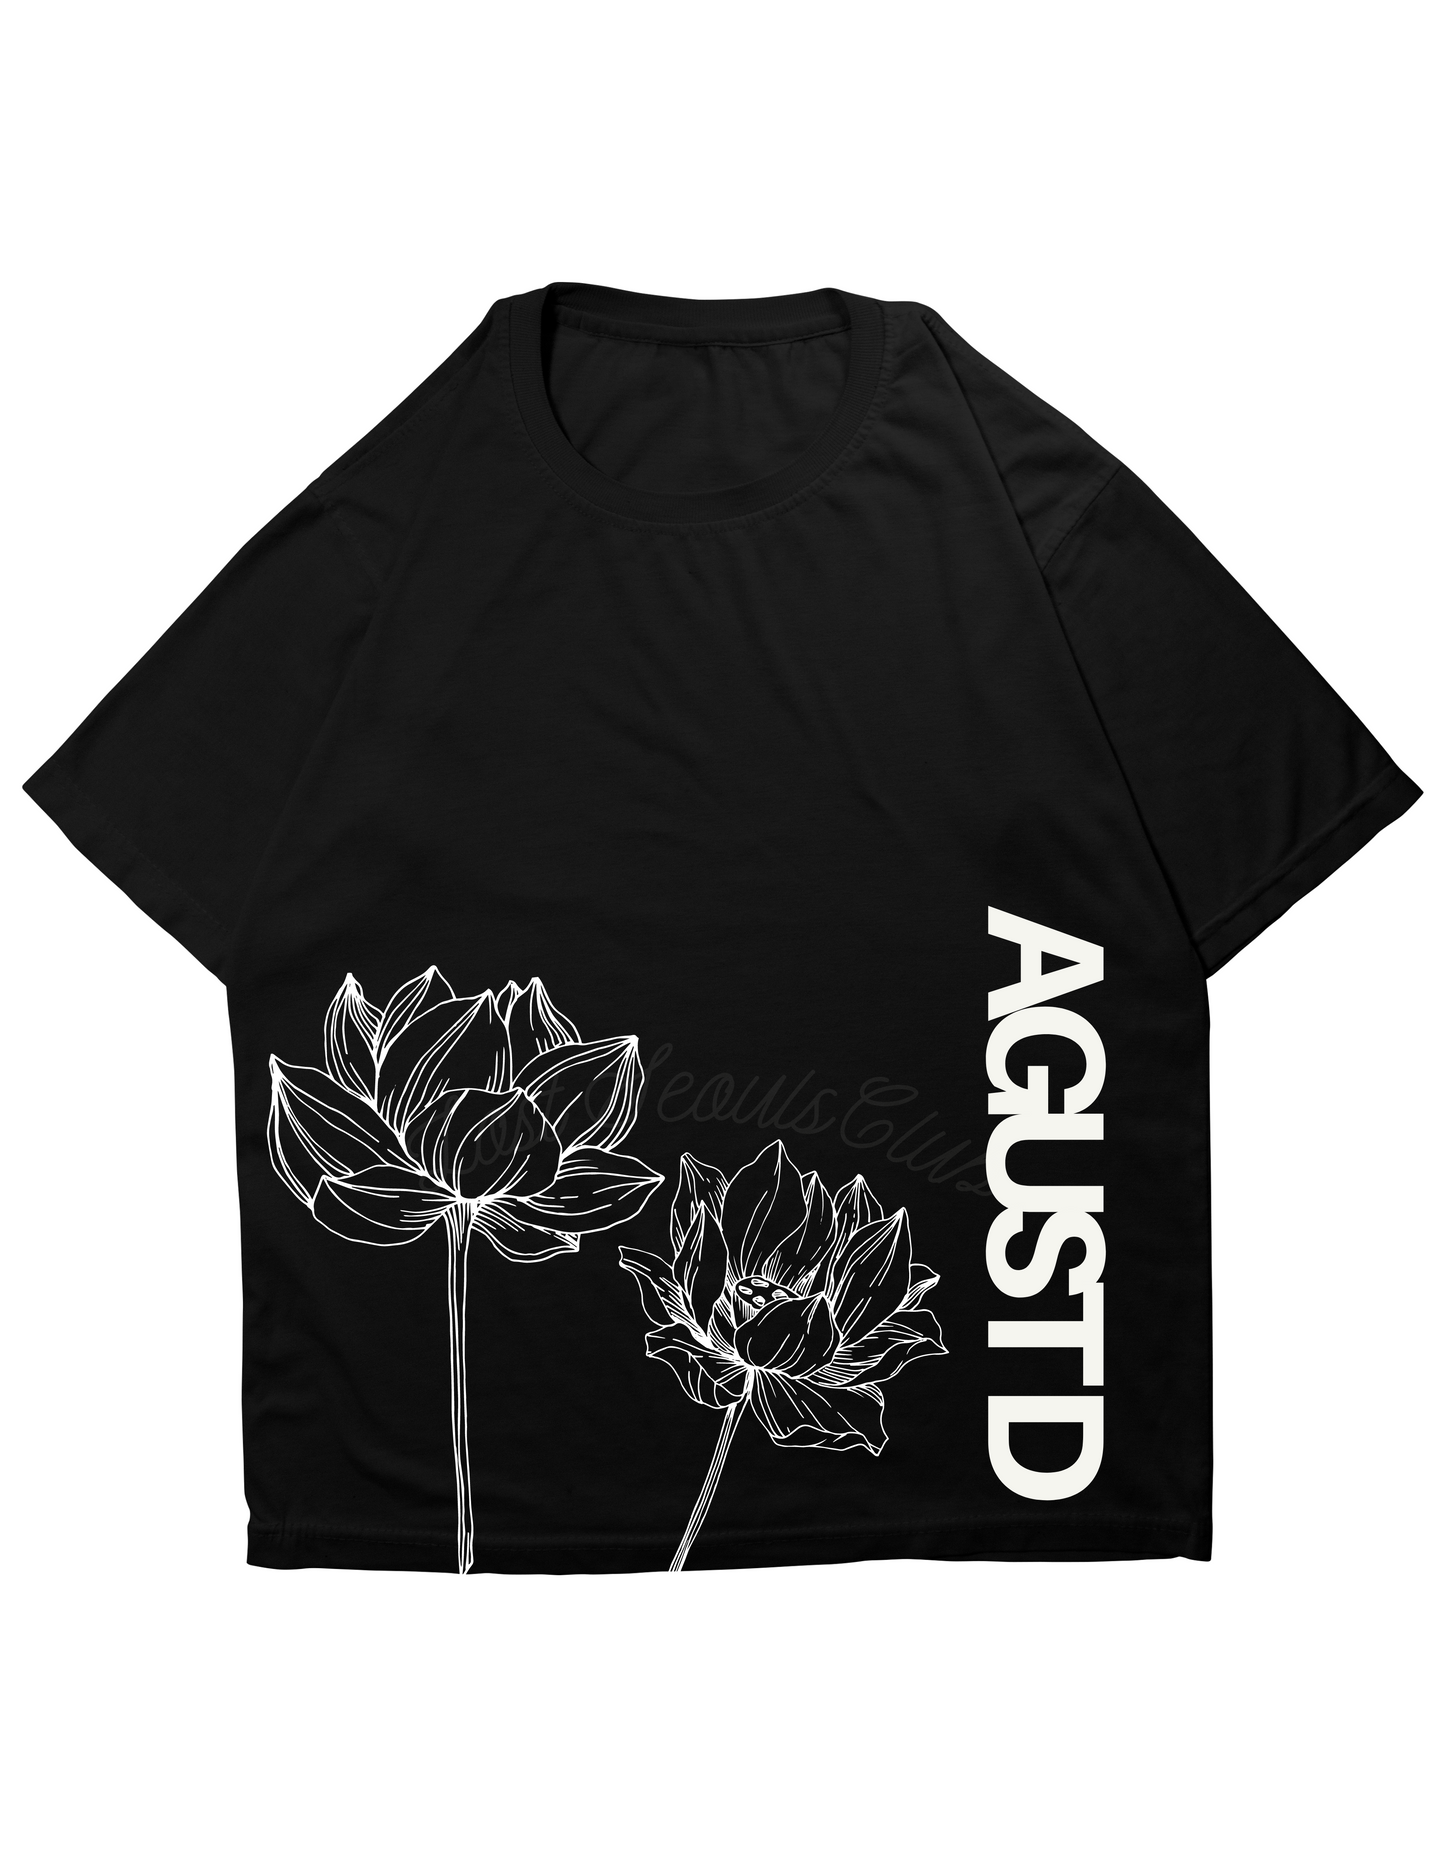 Amygdala AGUST D Oversized T-Shirt